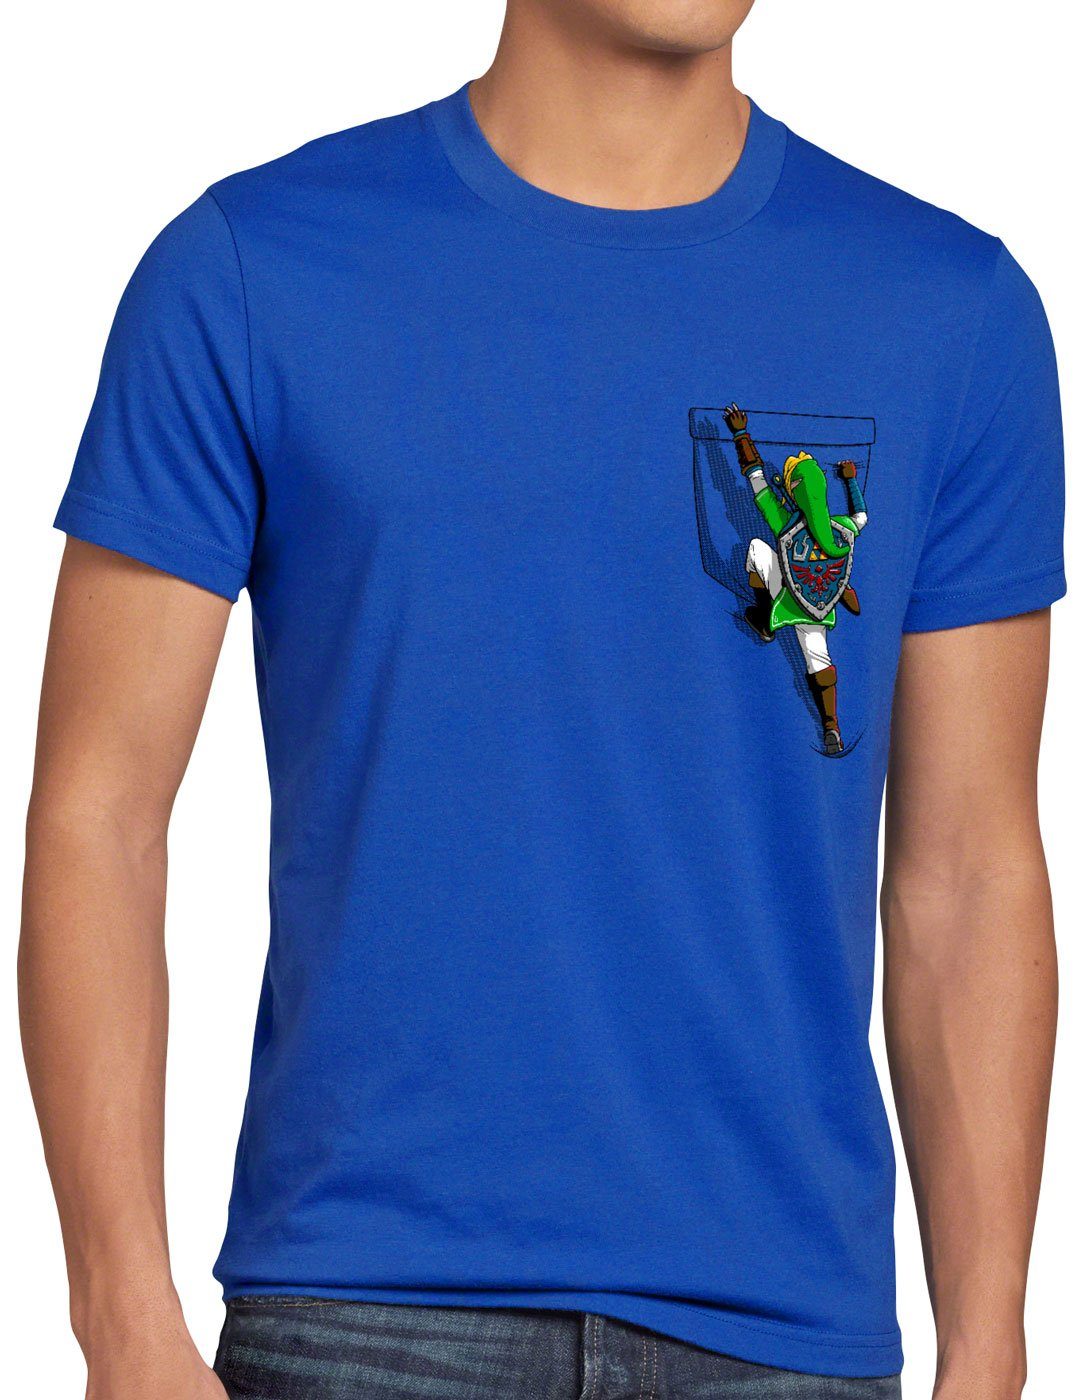 Brusttasche blau Print-Shirt snes Herren T-Shirt ocarina style3 the switch Link wild of breath